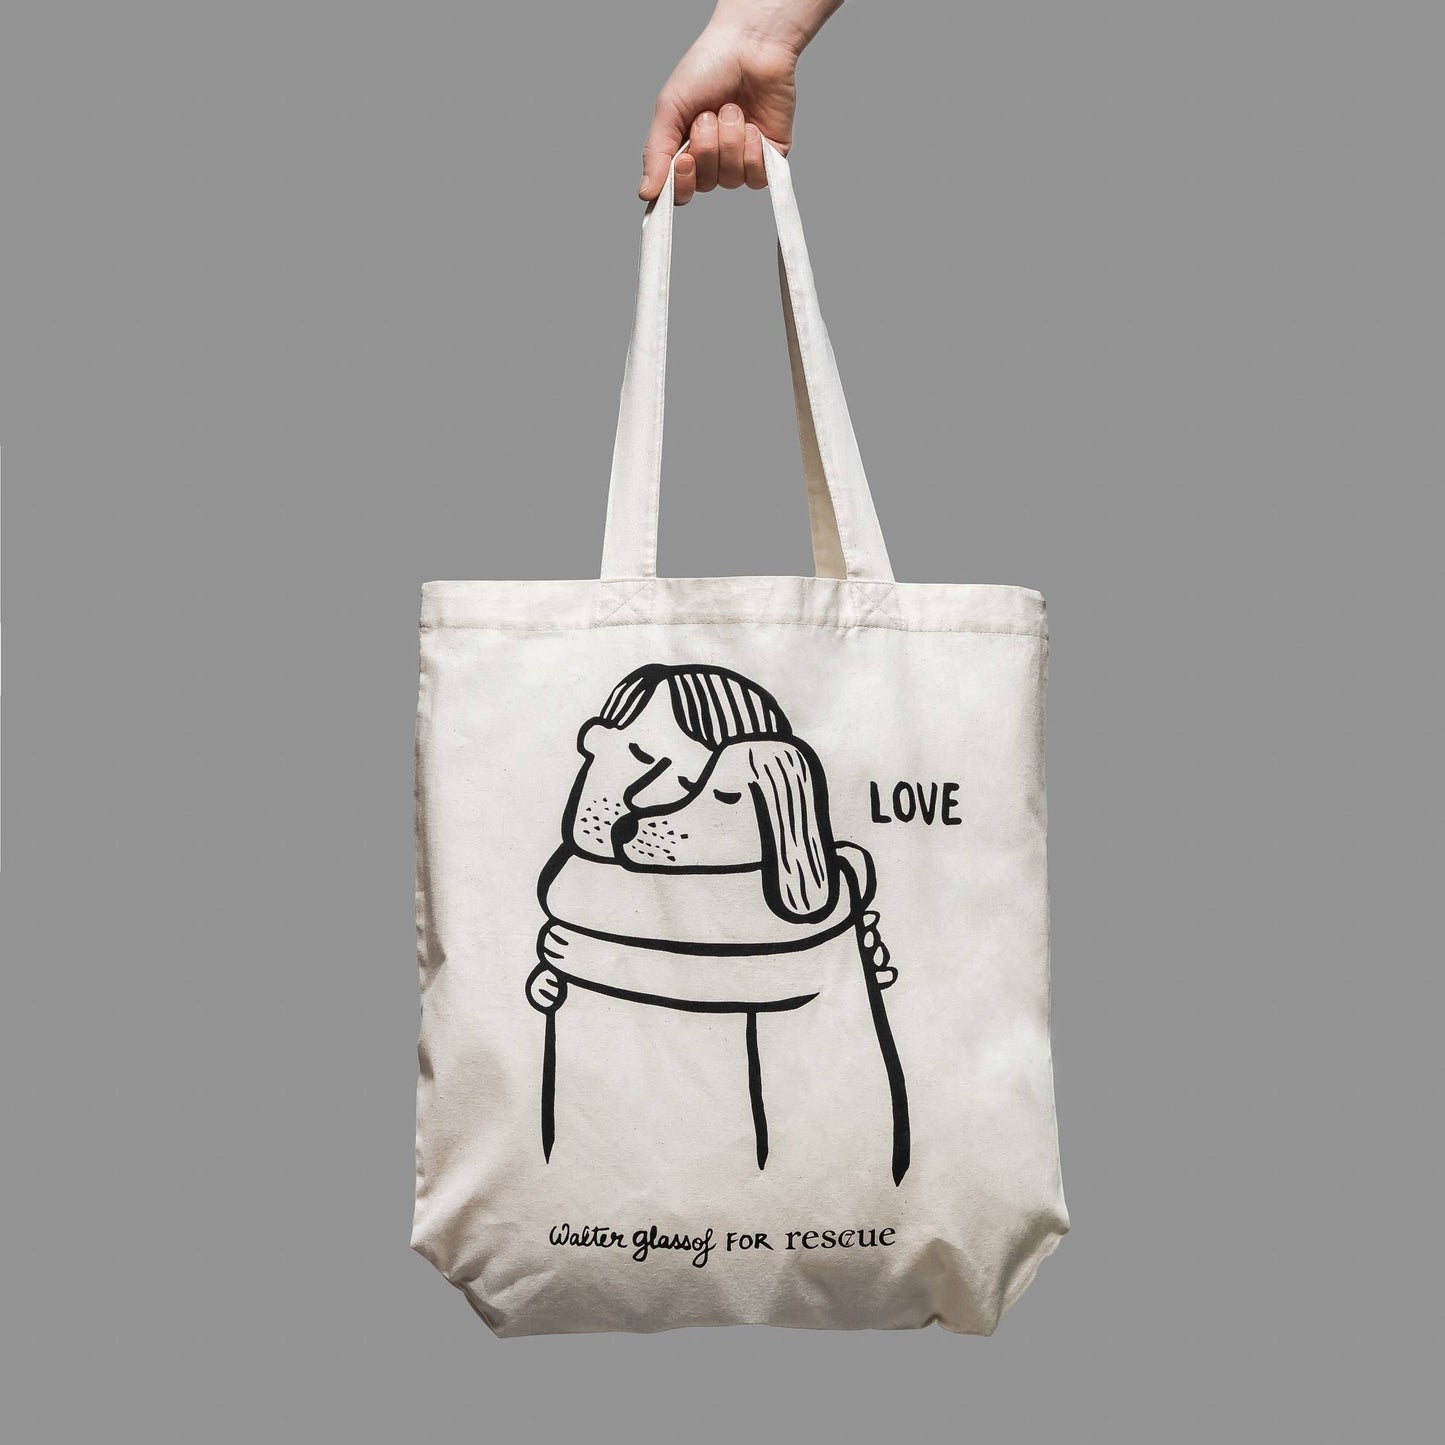 Cloud7 - Charity bag love